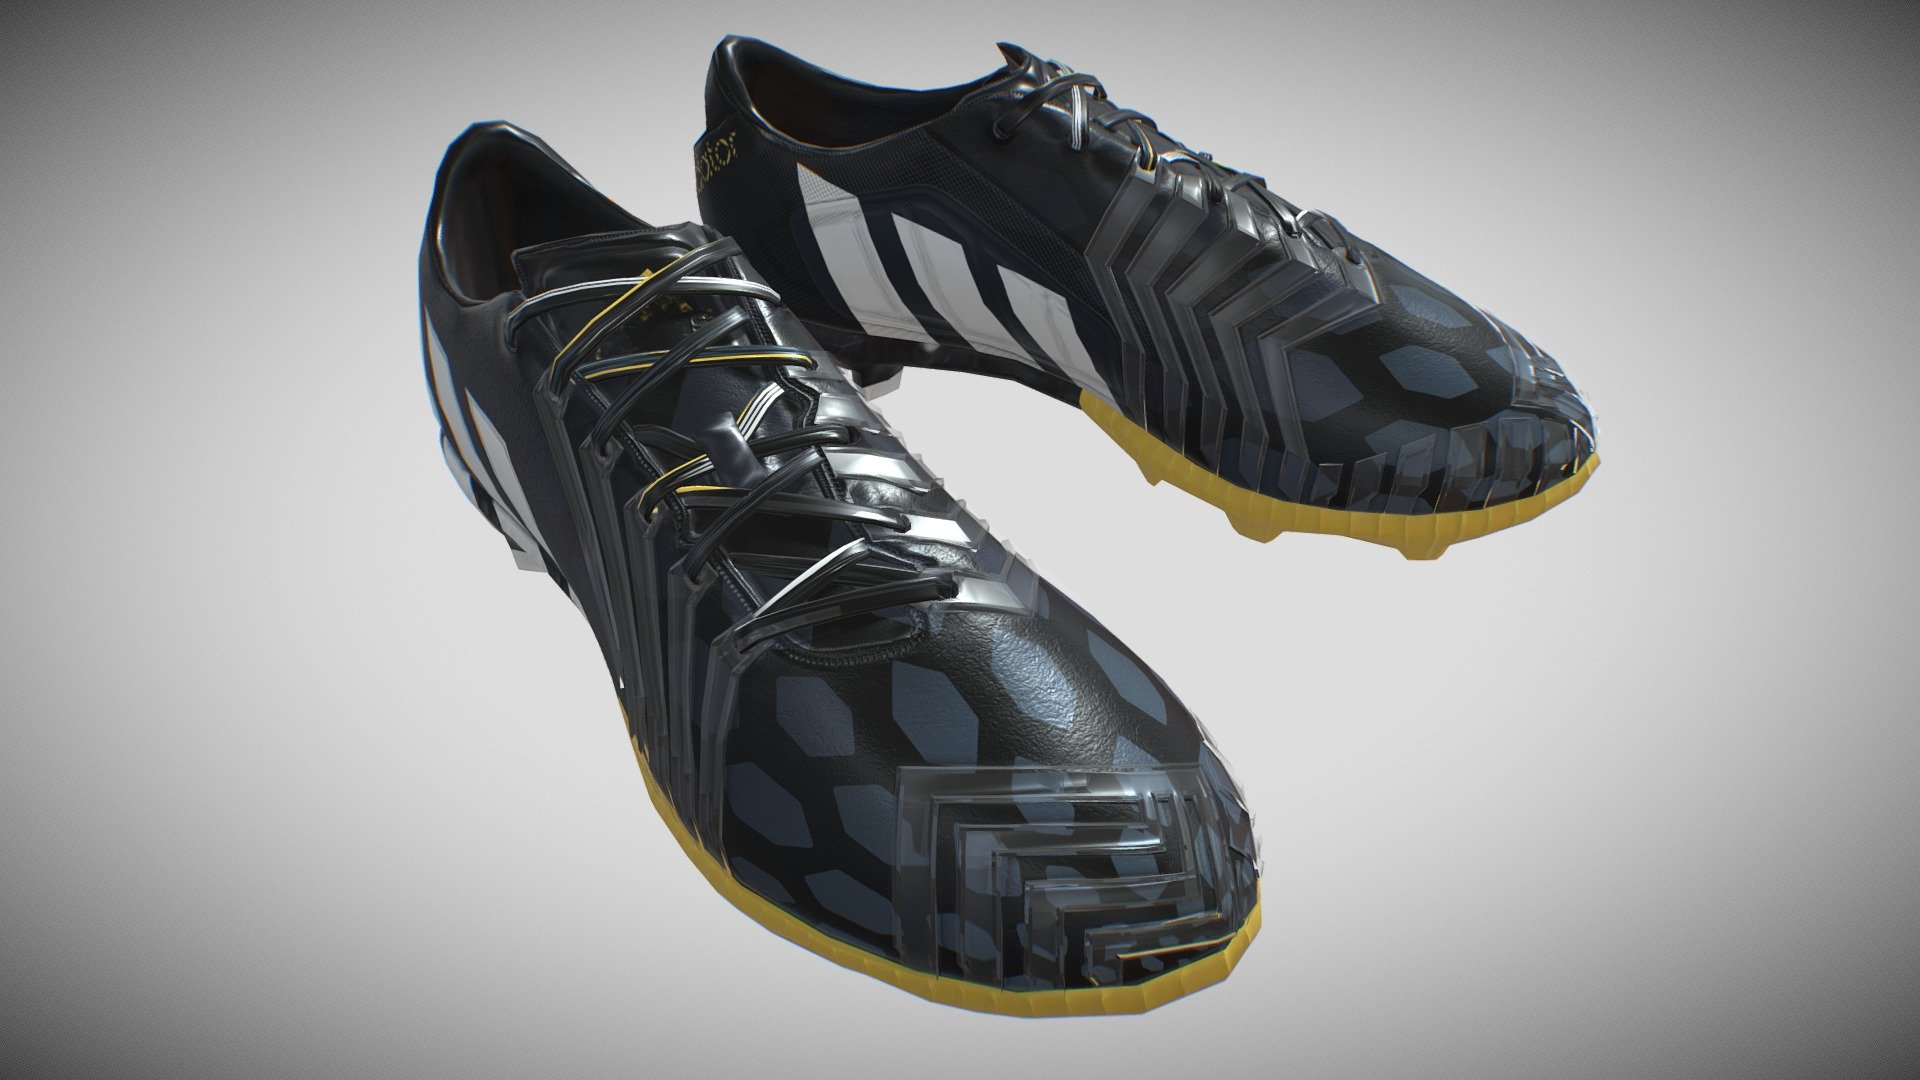 3d model of the footballer's boots - Football Boots - 3D model by djkorg 3d model